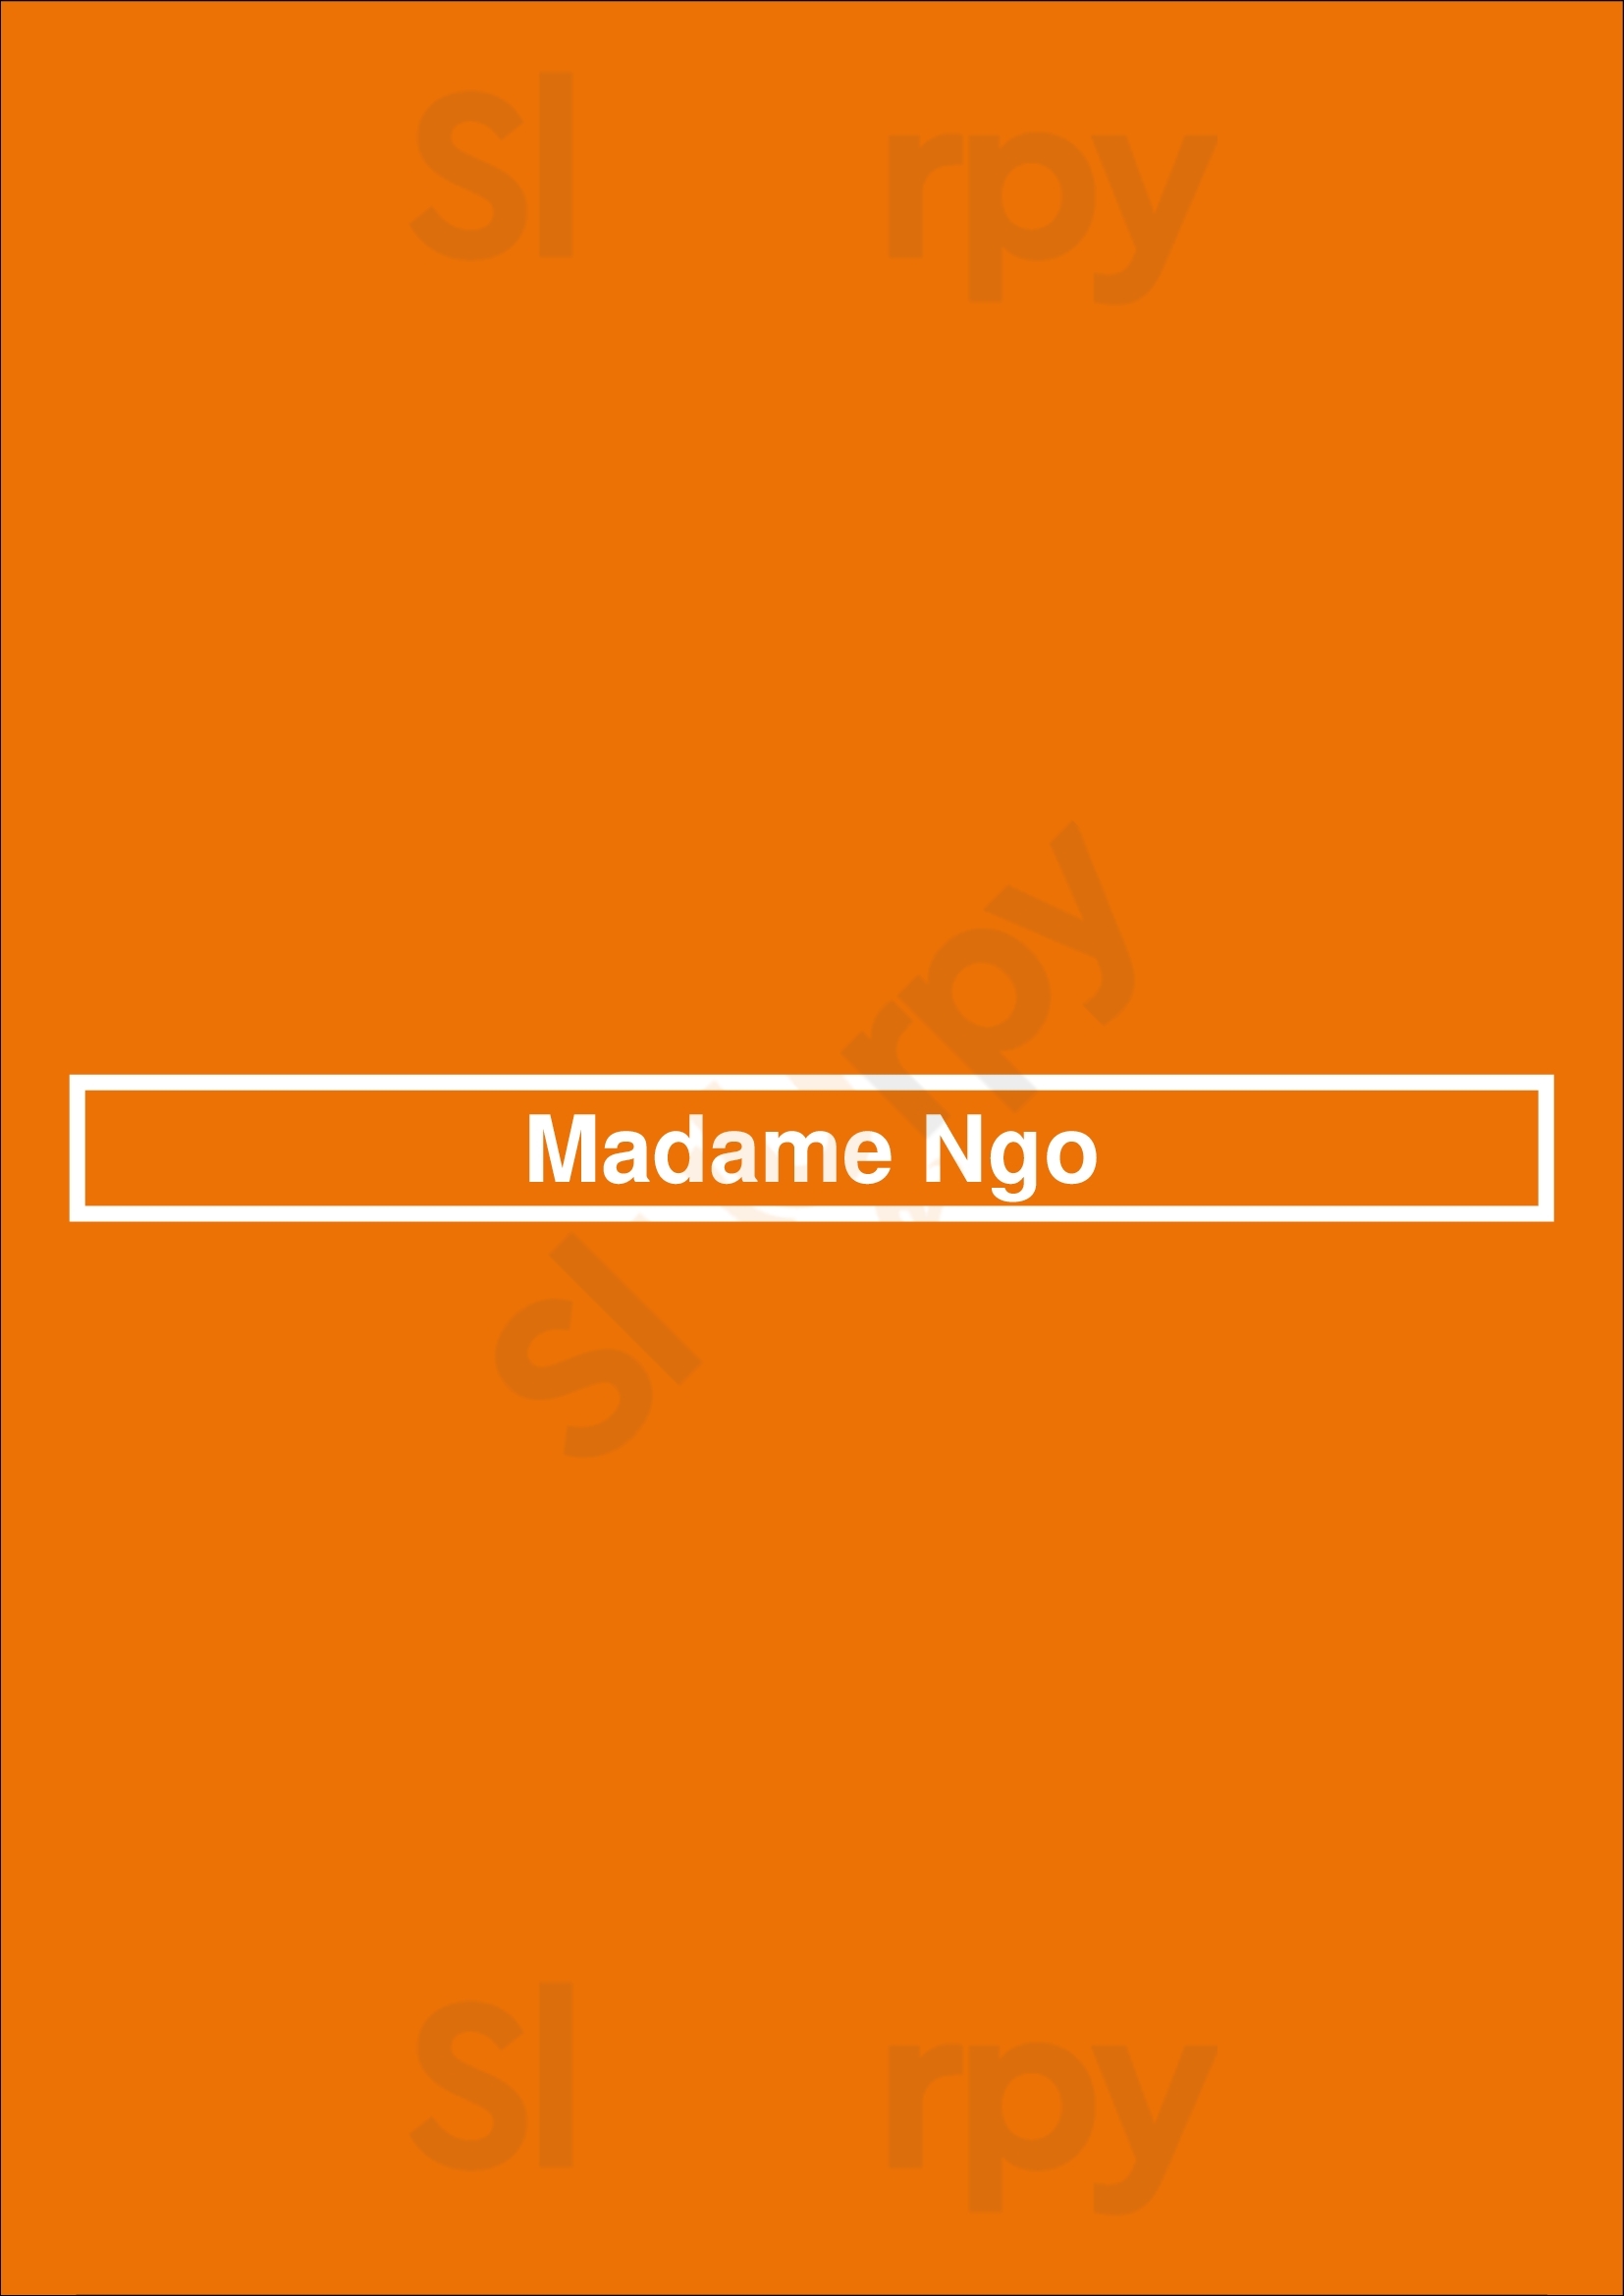 Madame Ngo Berlin Menu - 1